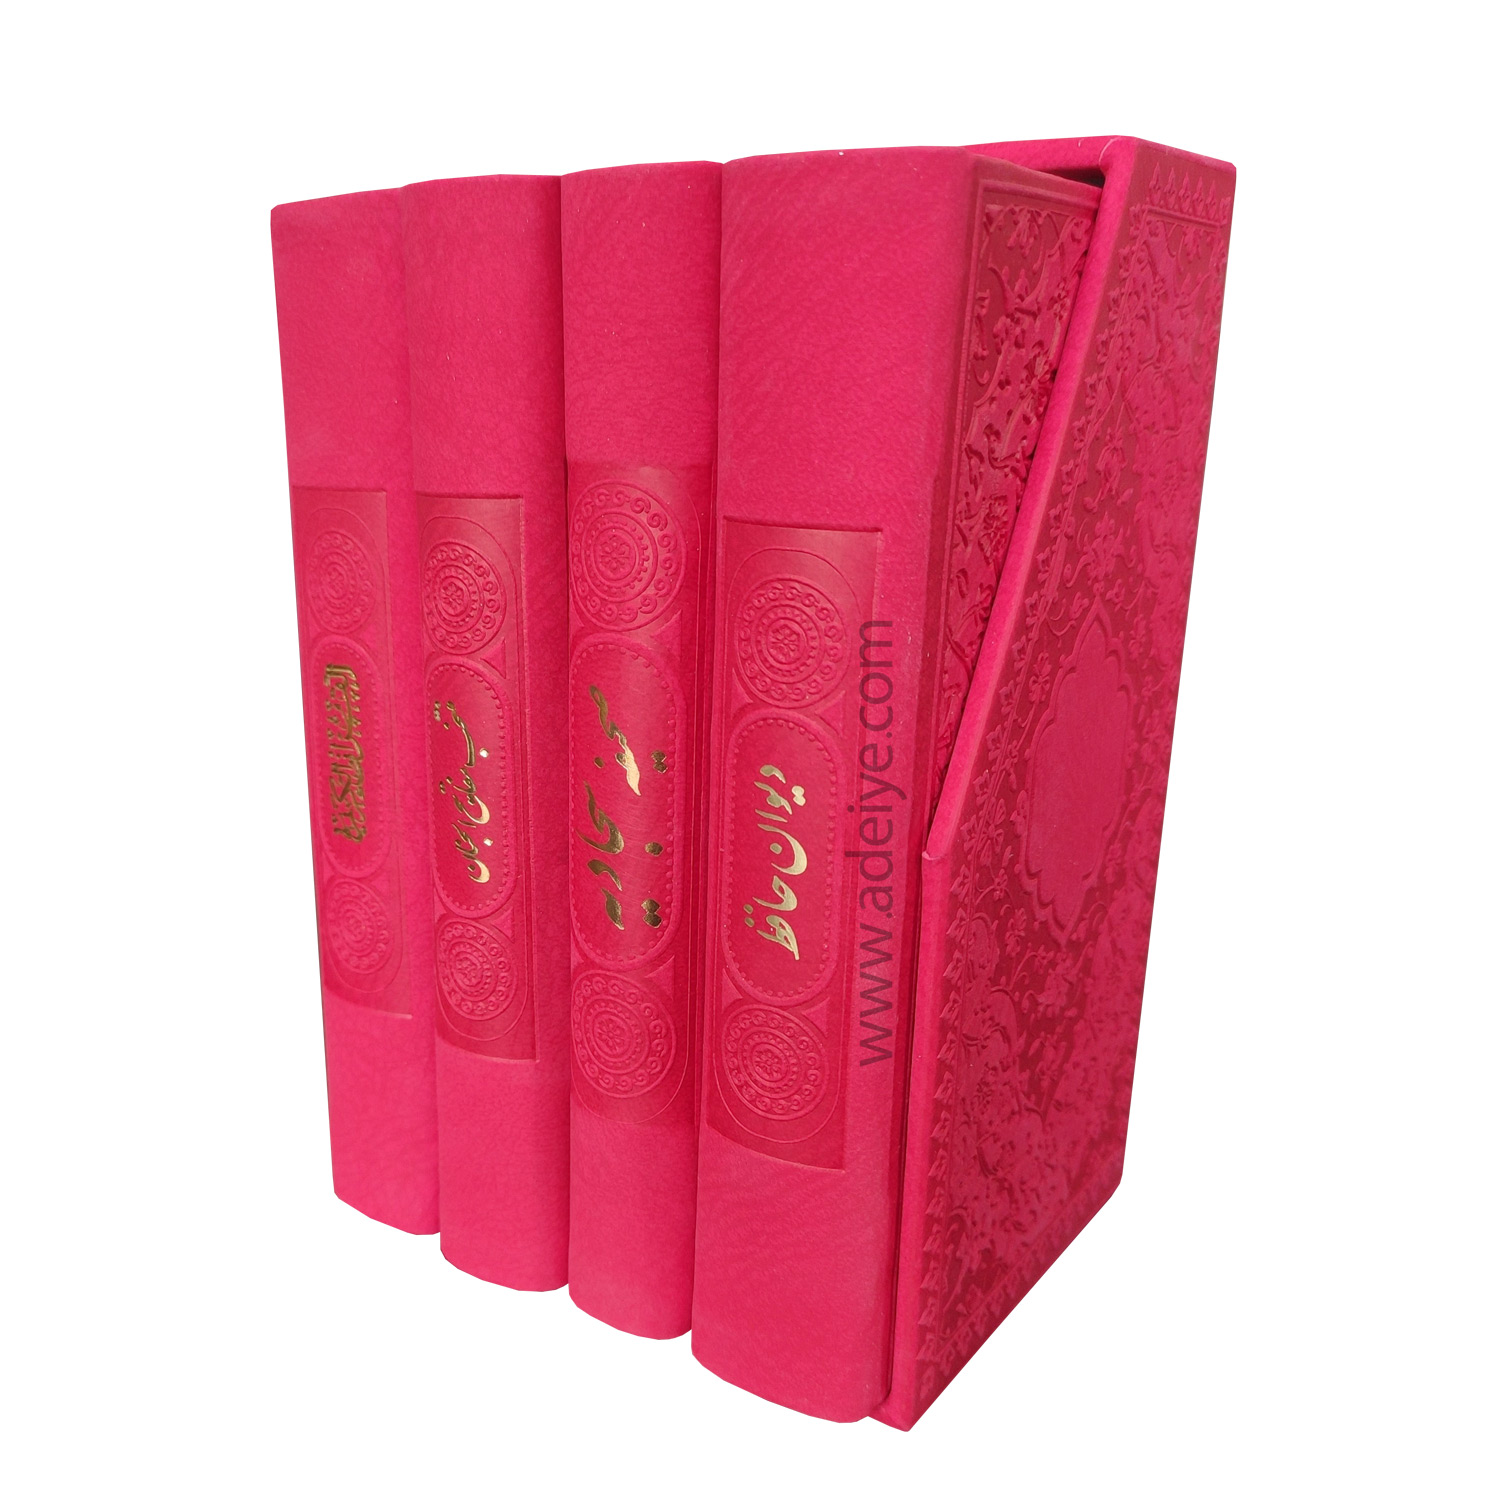 تصویر  مجموعه چهار جلدی پالتویی ترمو رنگی، شامل قرآن کریم، منتخب مفاتیح الجنان، صحیفه سجادیه و دیوان حافظ